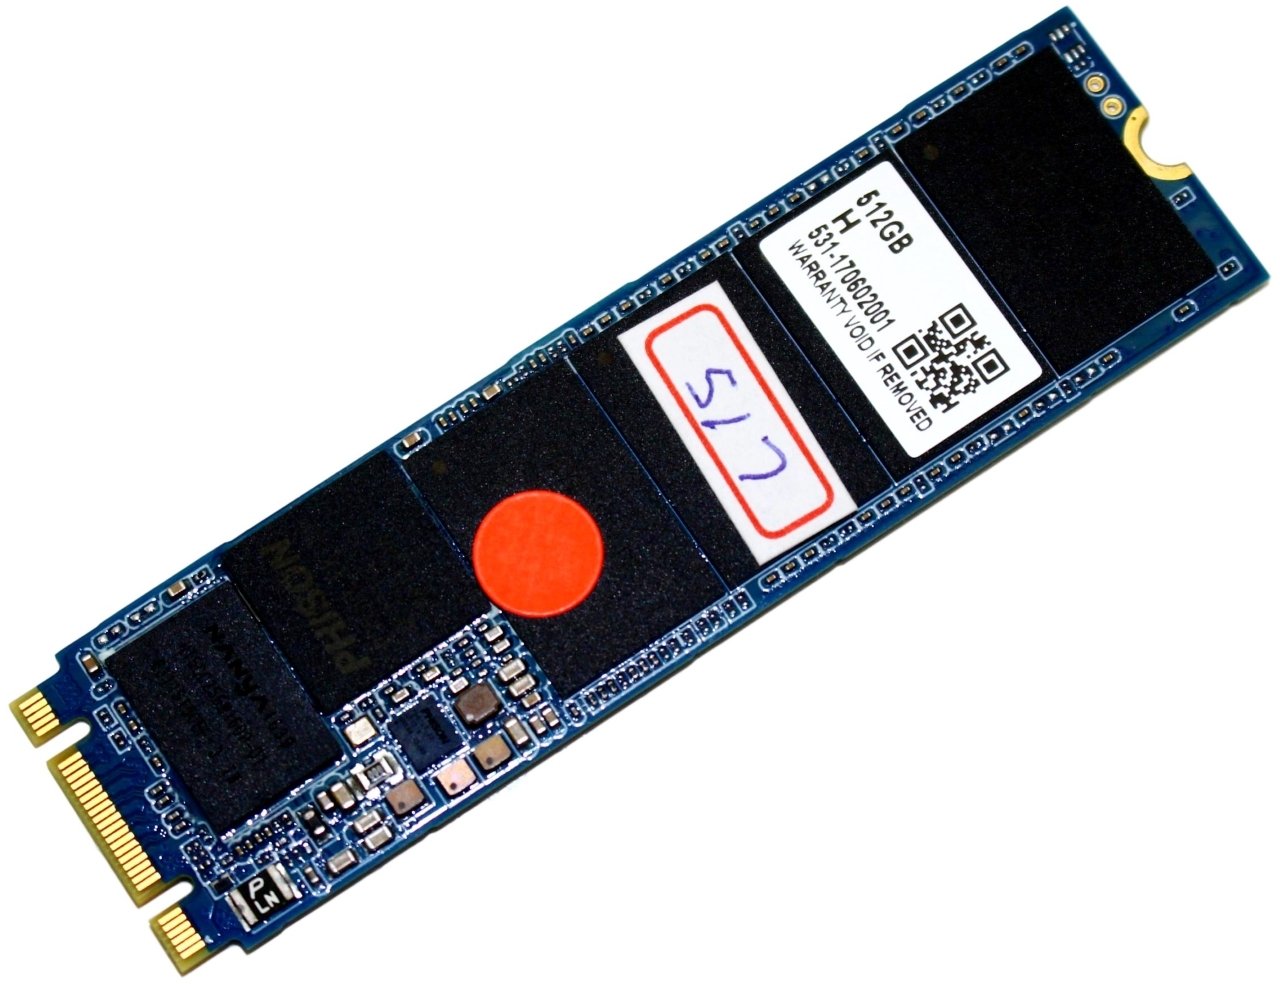 Phison E8 512GB M.2 NVMe PCIe SSD Preview